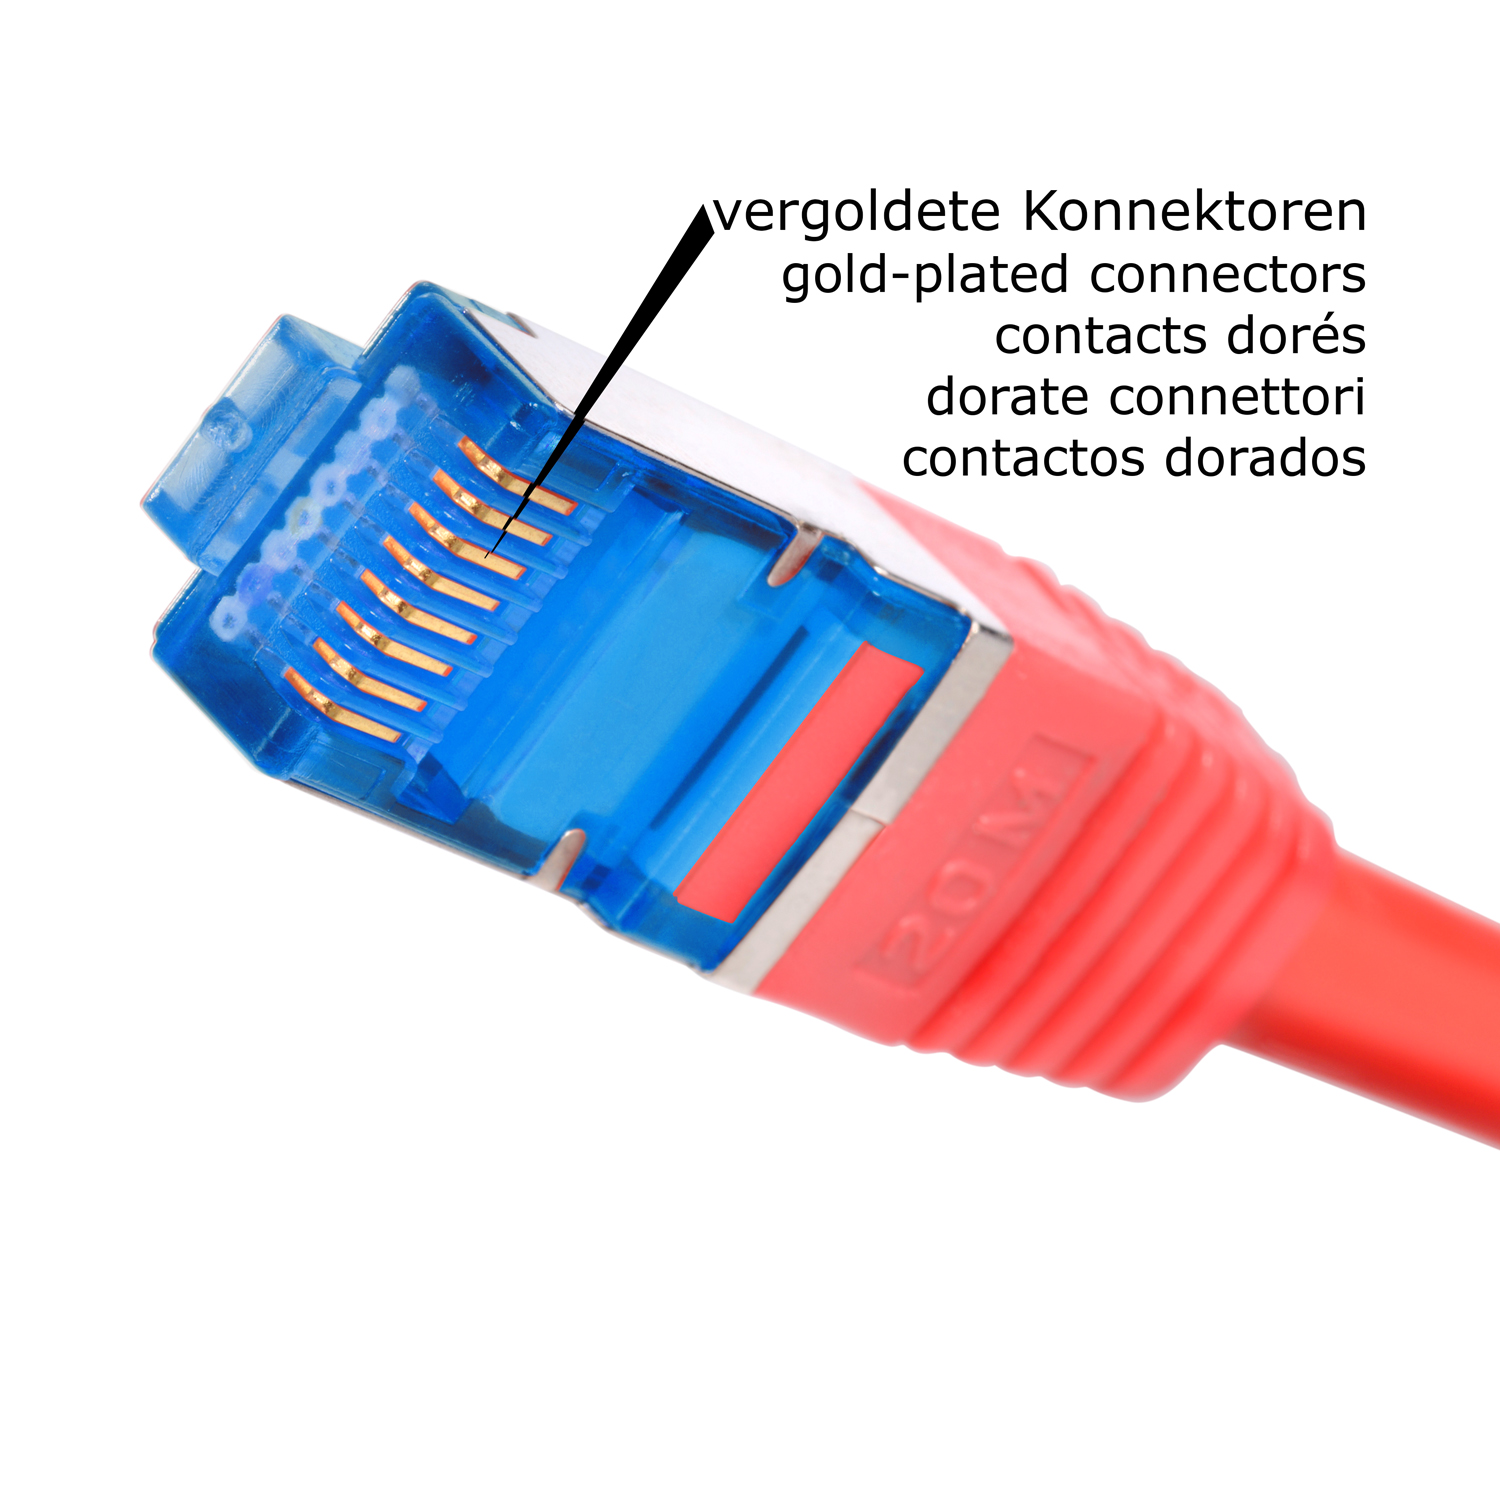 TPFNET 10er Pack 2m S/FTP m Netzwerkkabel Netzwerkkabel, Patchkabel rot, 10GBit, 2 